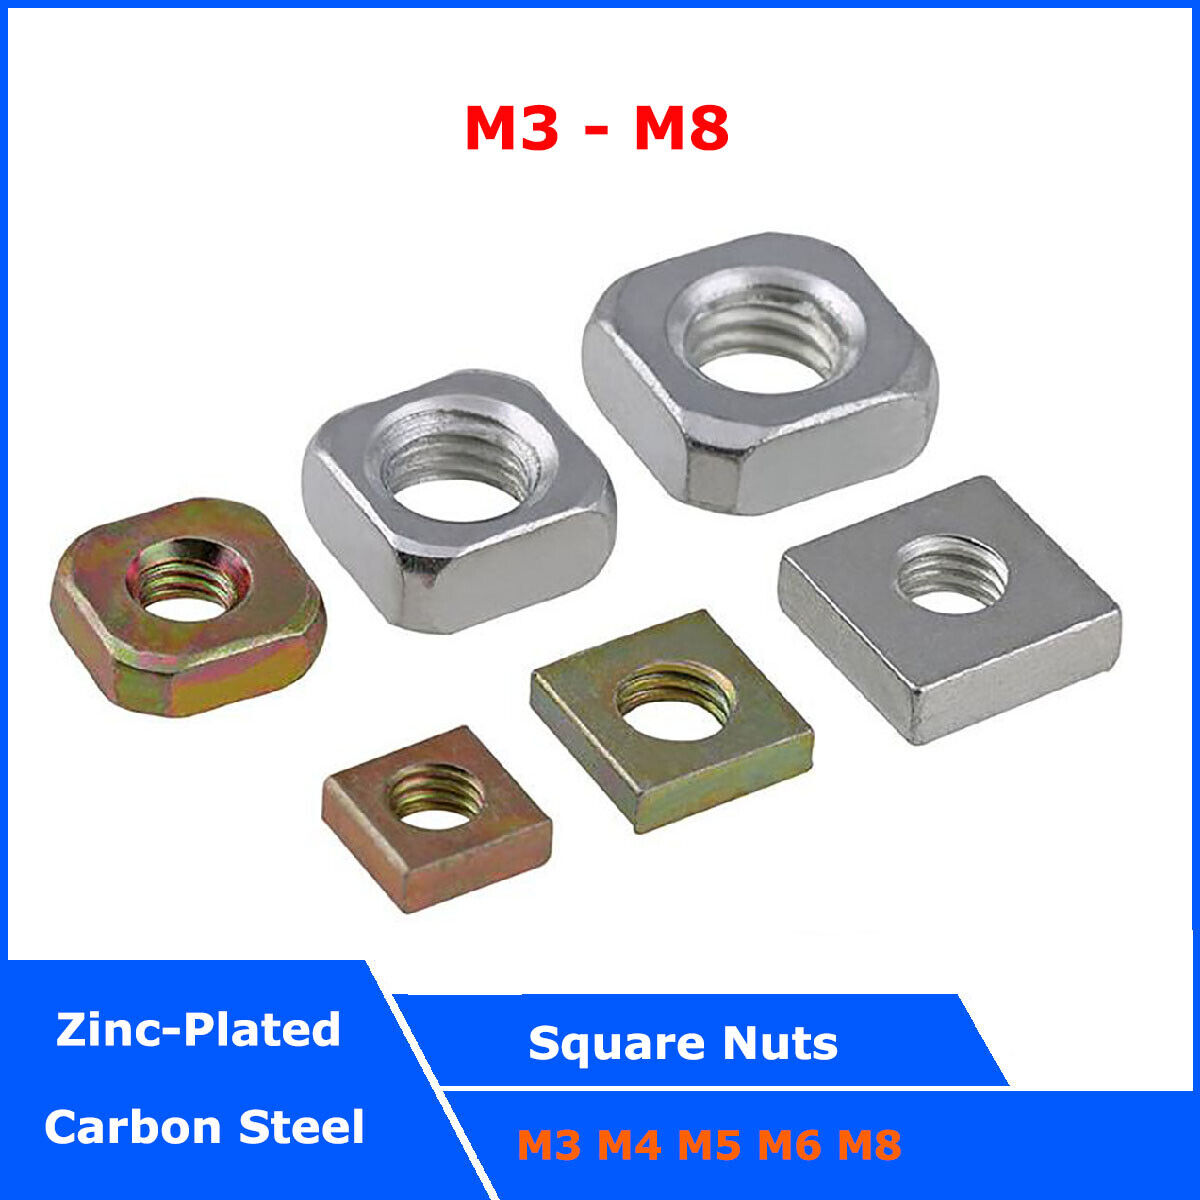 Square Nuts M3 M4 M5 M6 M8 Metric Coarse Thread For Screw Bolt Zinc-plated Steel